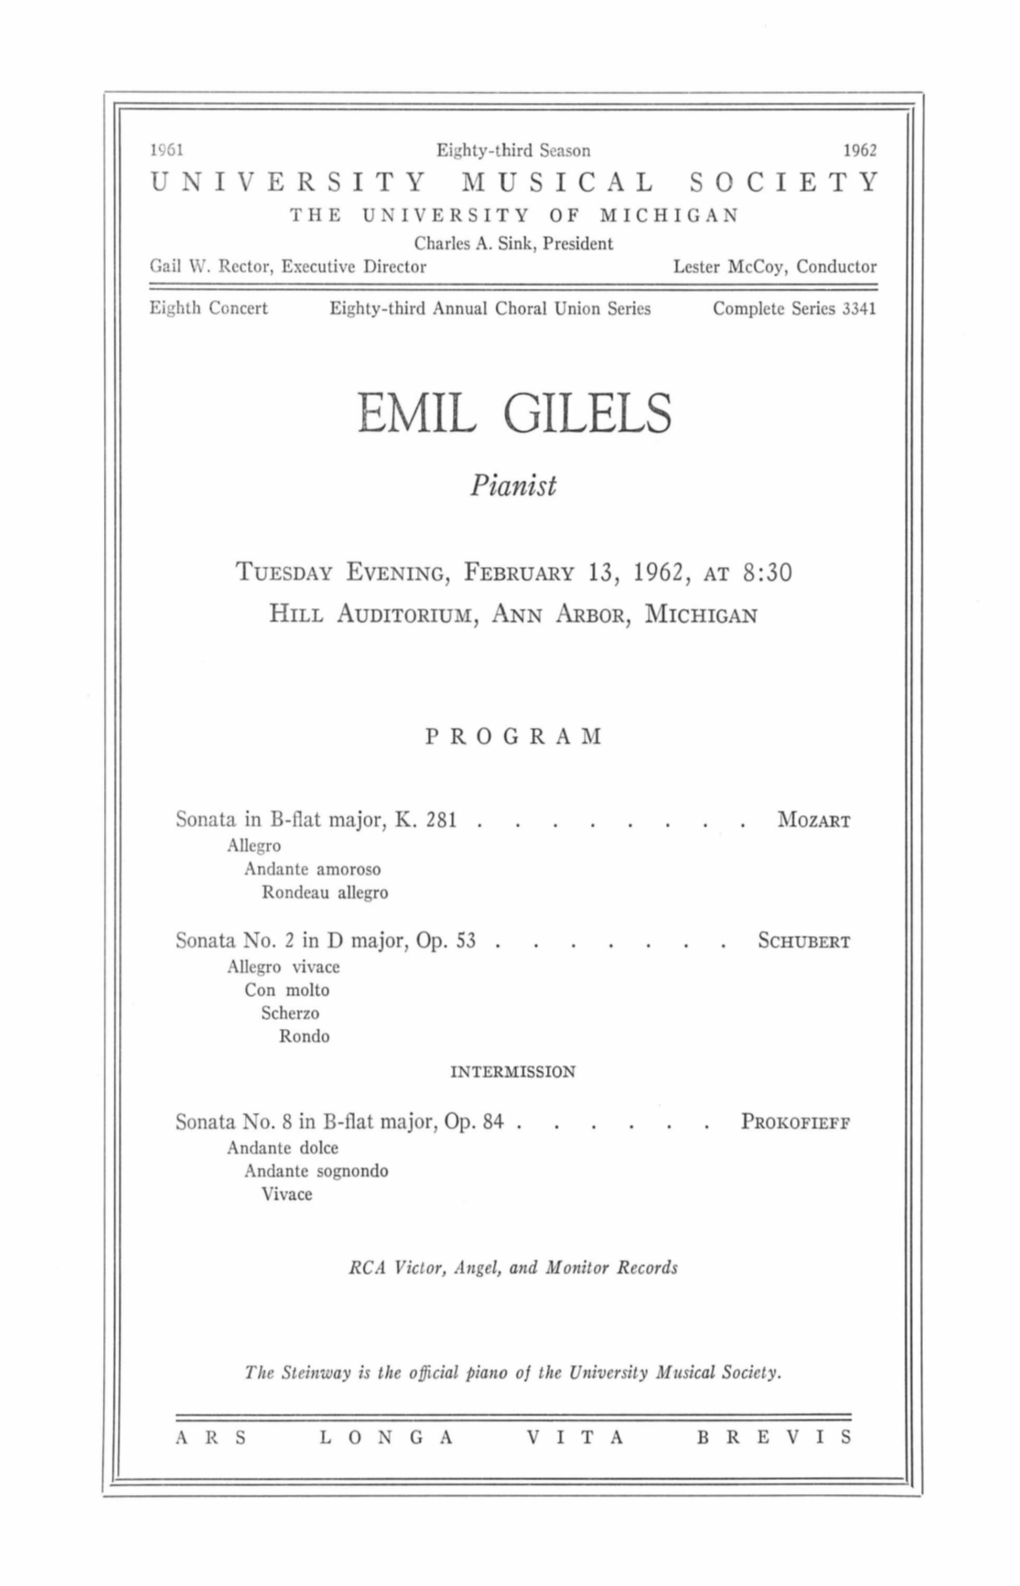 EMIL GILELS Pianist